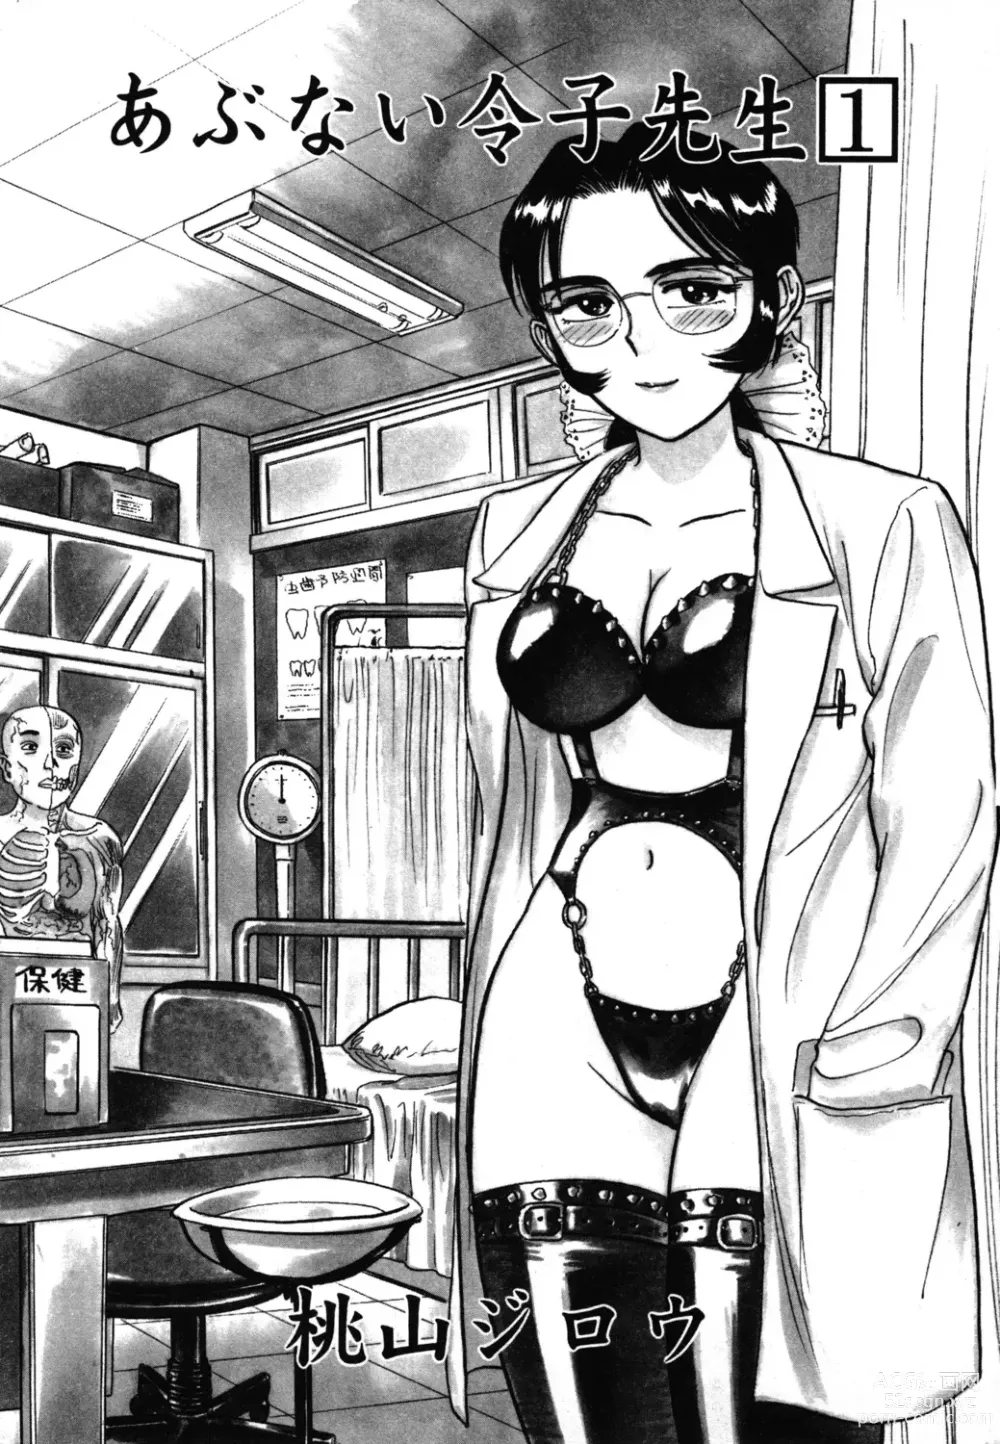 Page 3 of manga Abunai Reiko Sensei 1